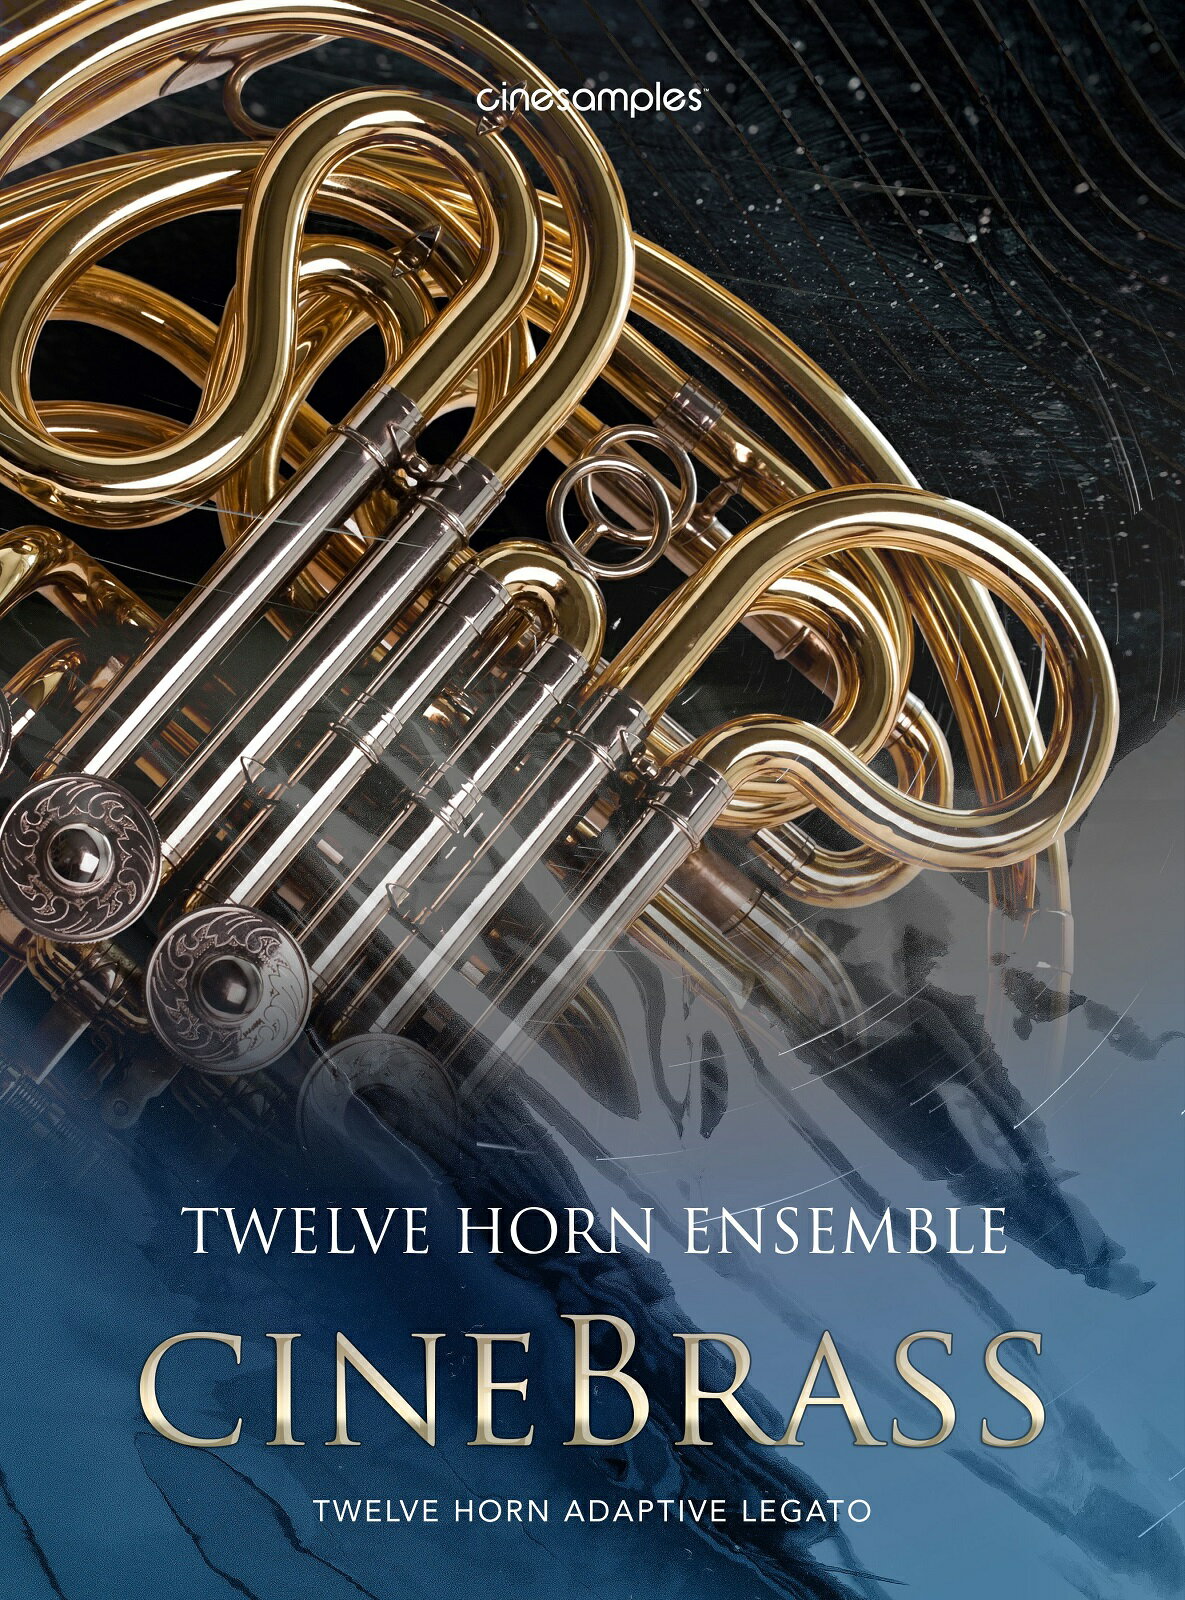 CinesamplesCineBrass Twelve Horn Ensemble【メール納品】【送料無料】